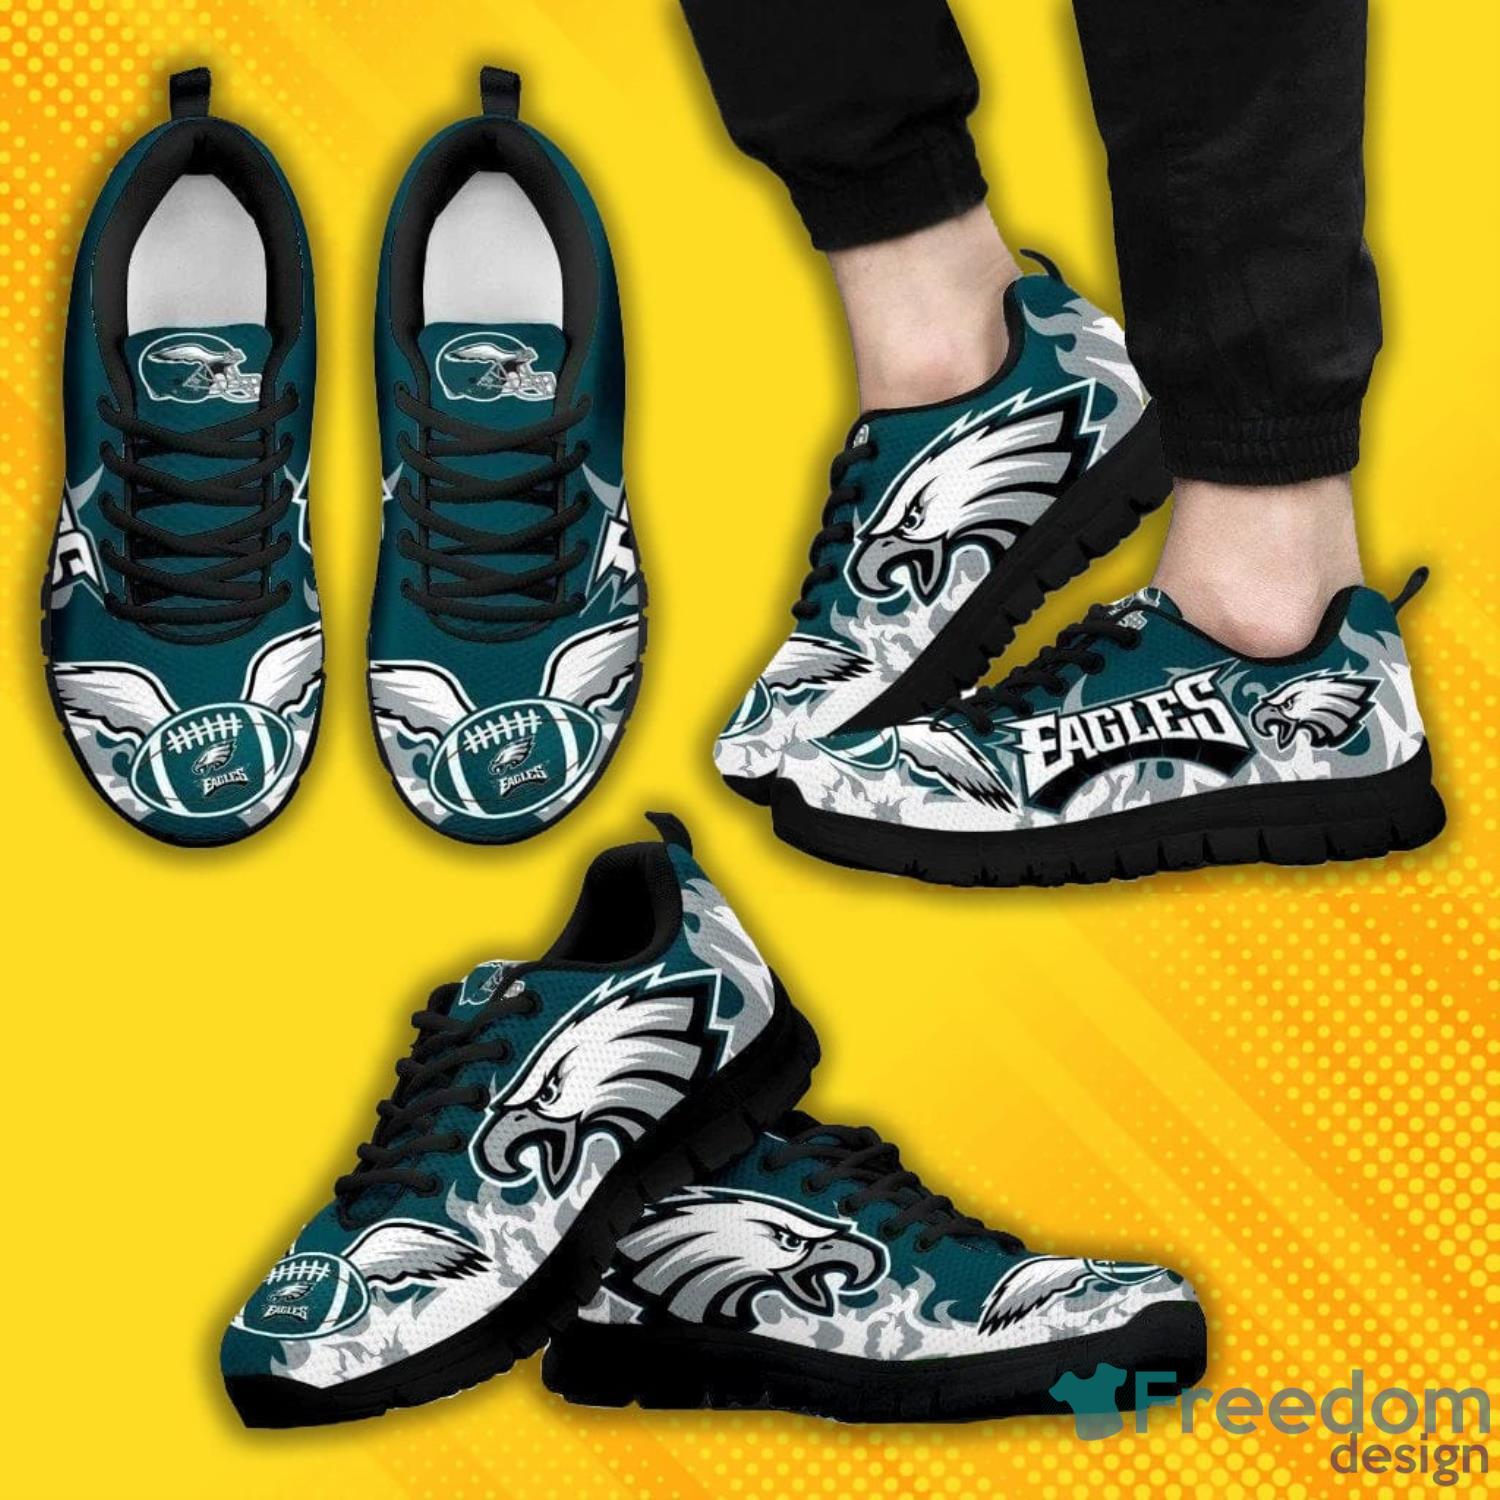 Philadelphia Eagles Sneakers Shoes For Fans - Freedomdesign